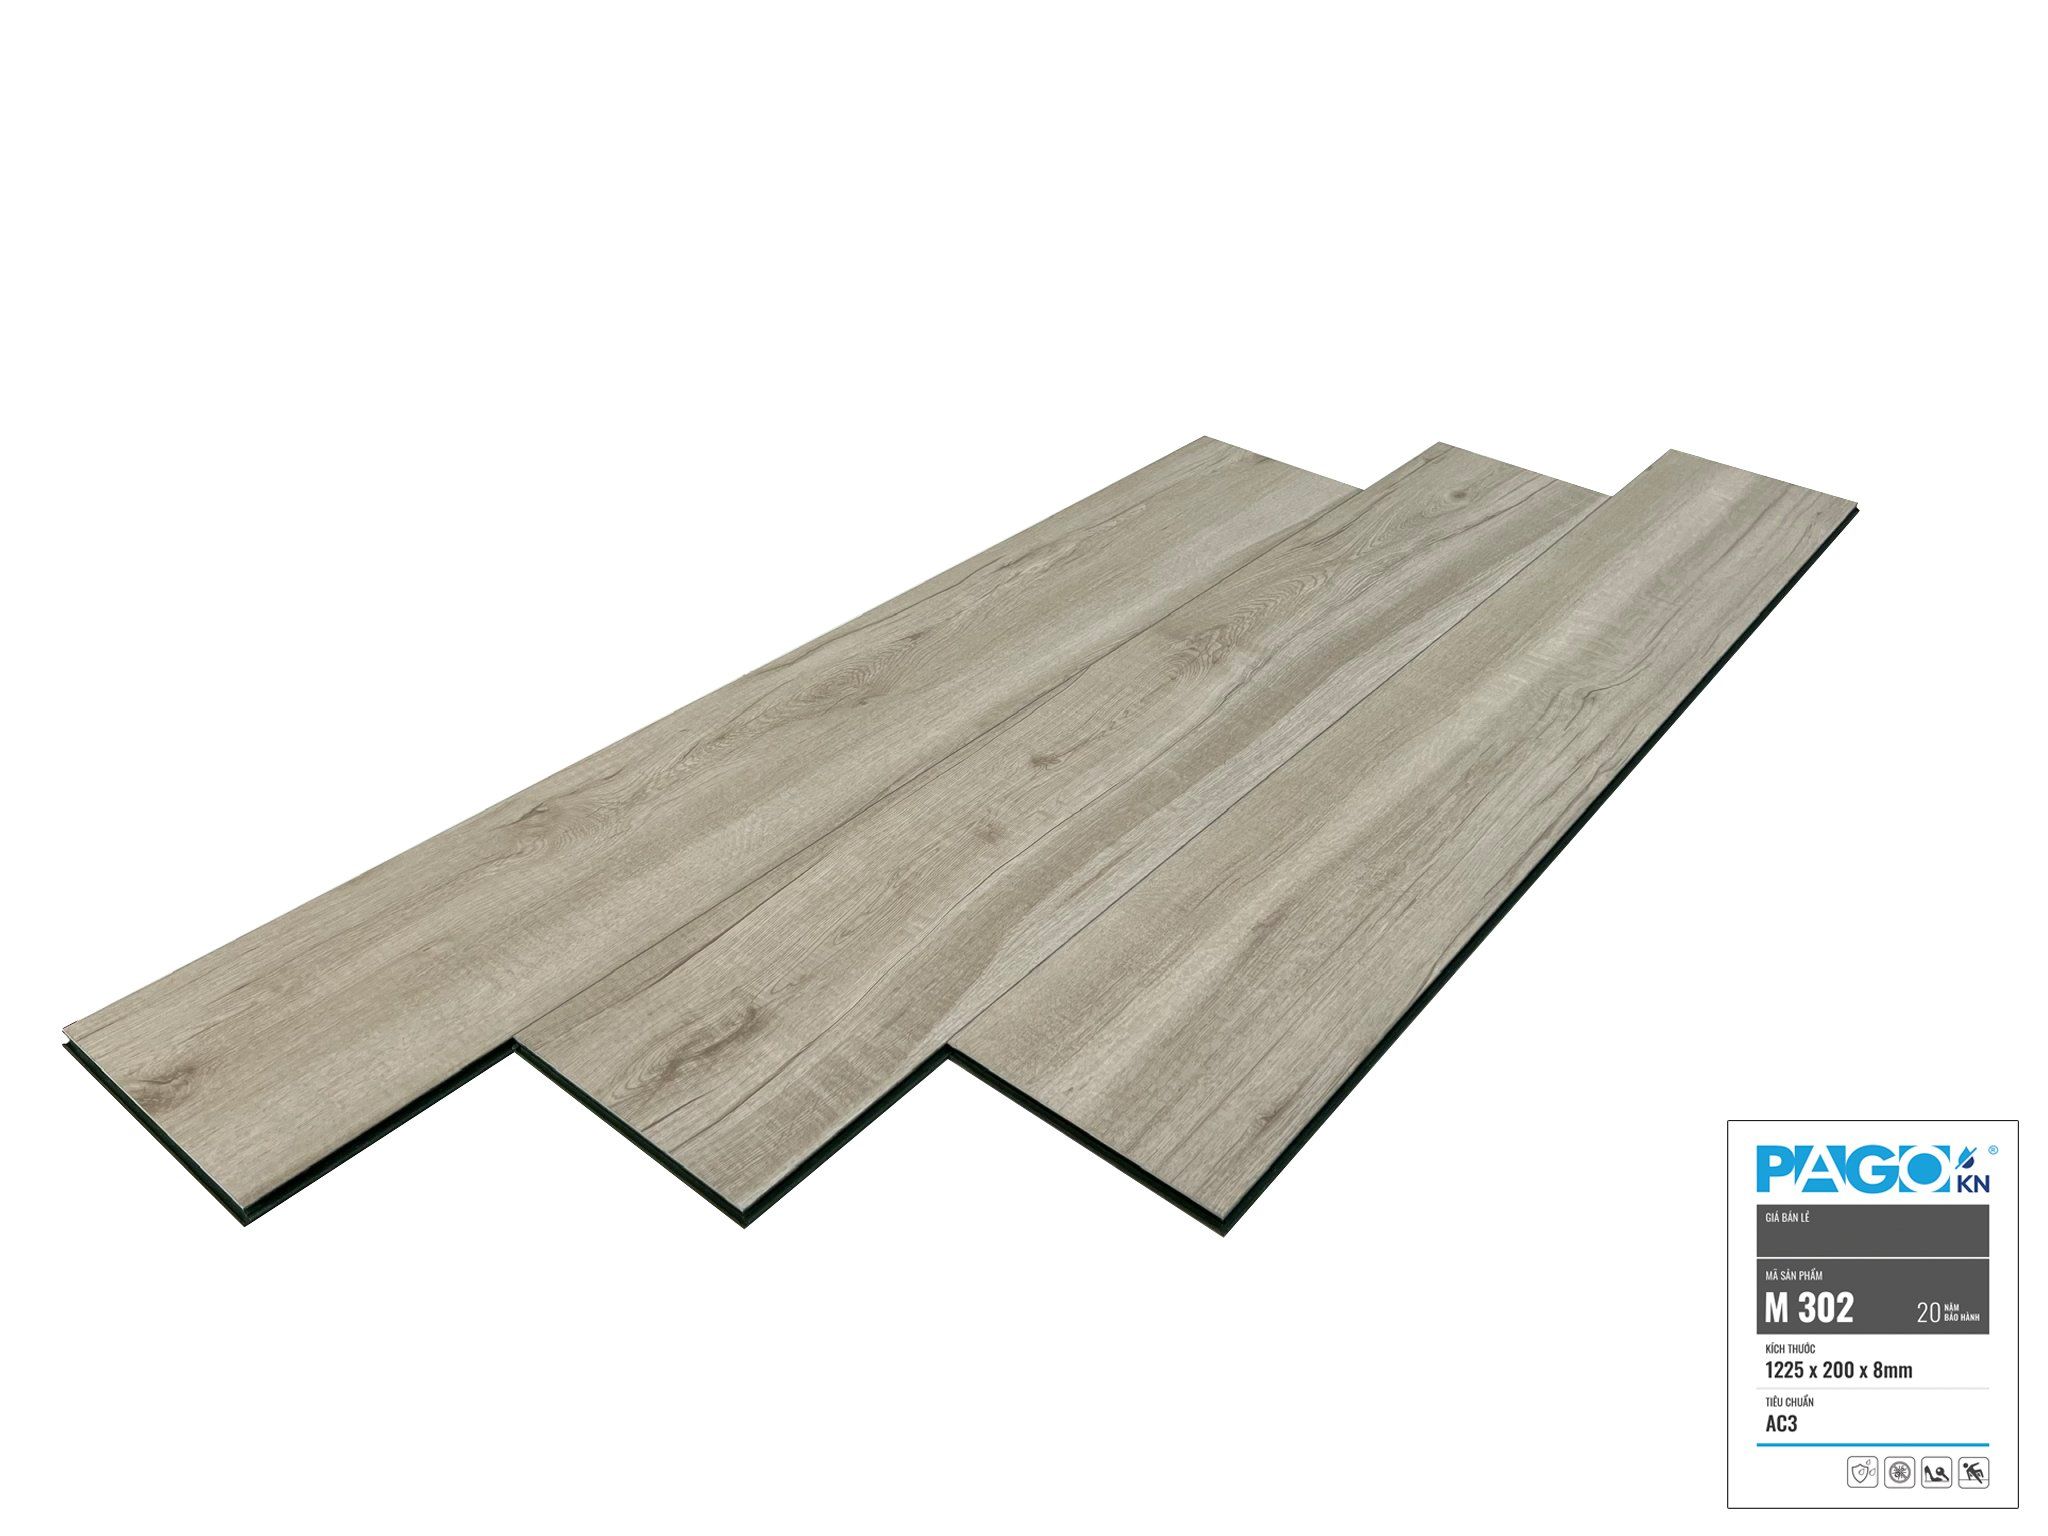  Sàn gỗ Pago – M302 